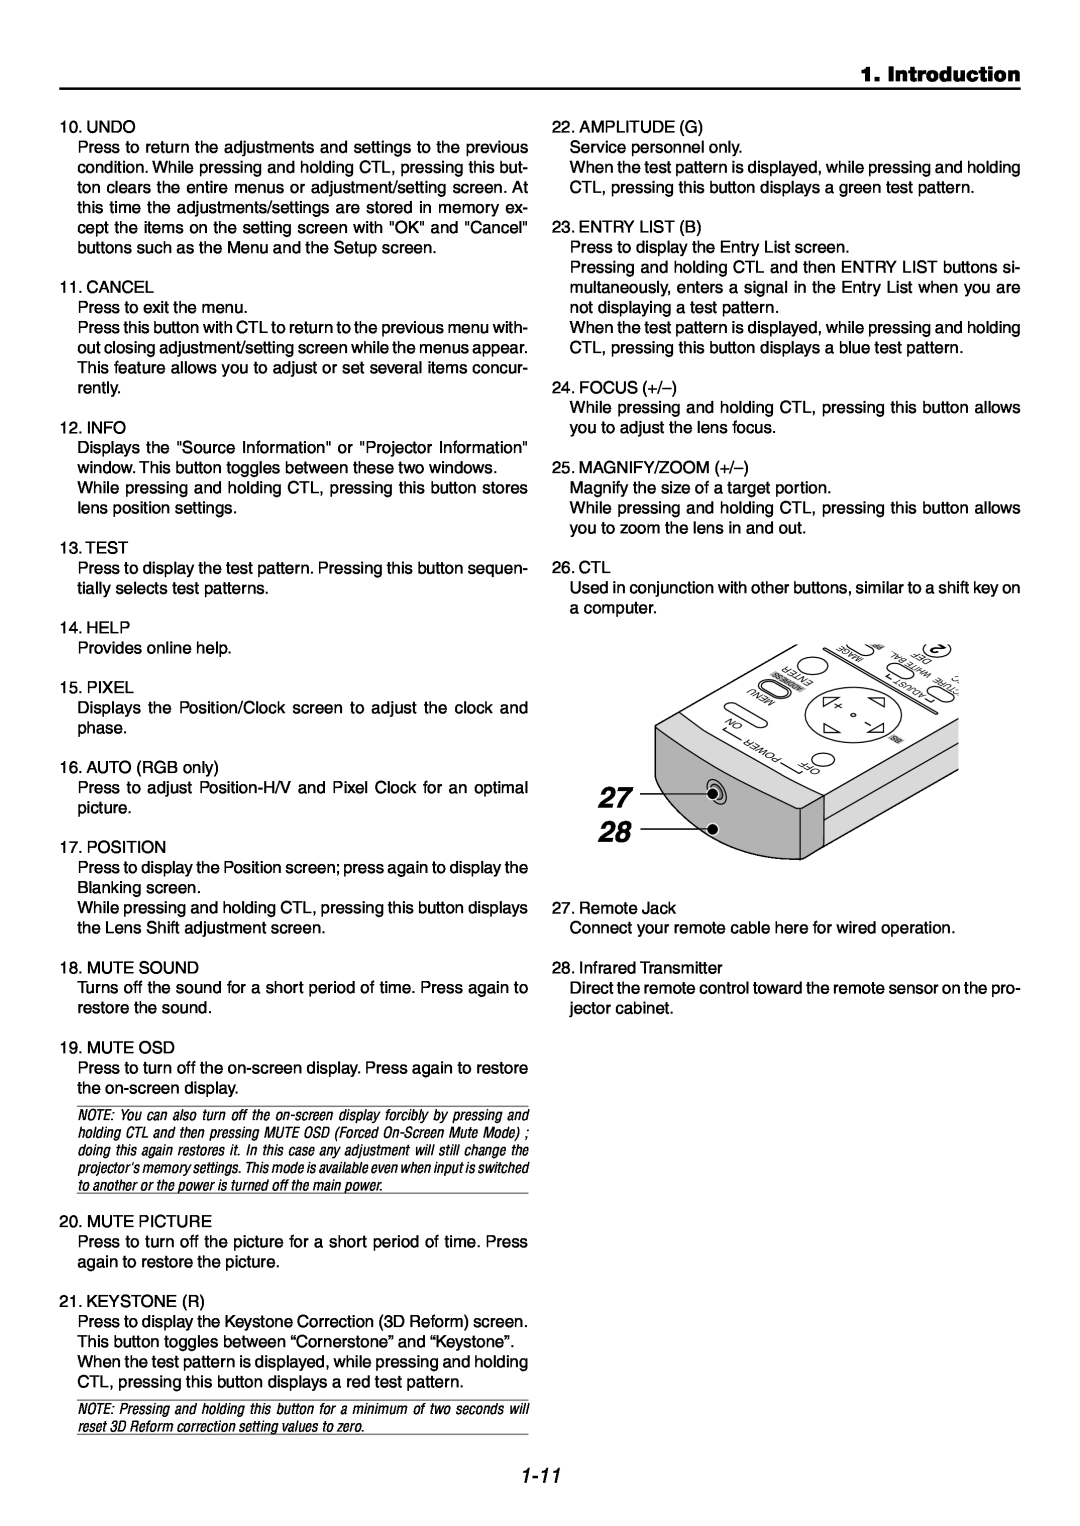 NEC GT6000 user manual 27 28, Introduction, 1-11, Undo 